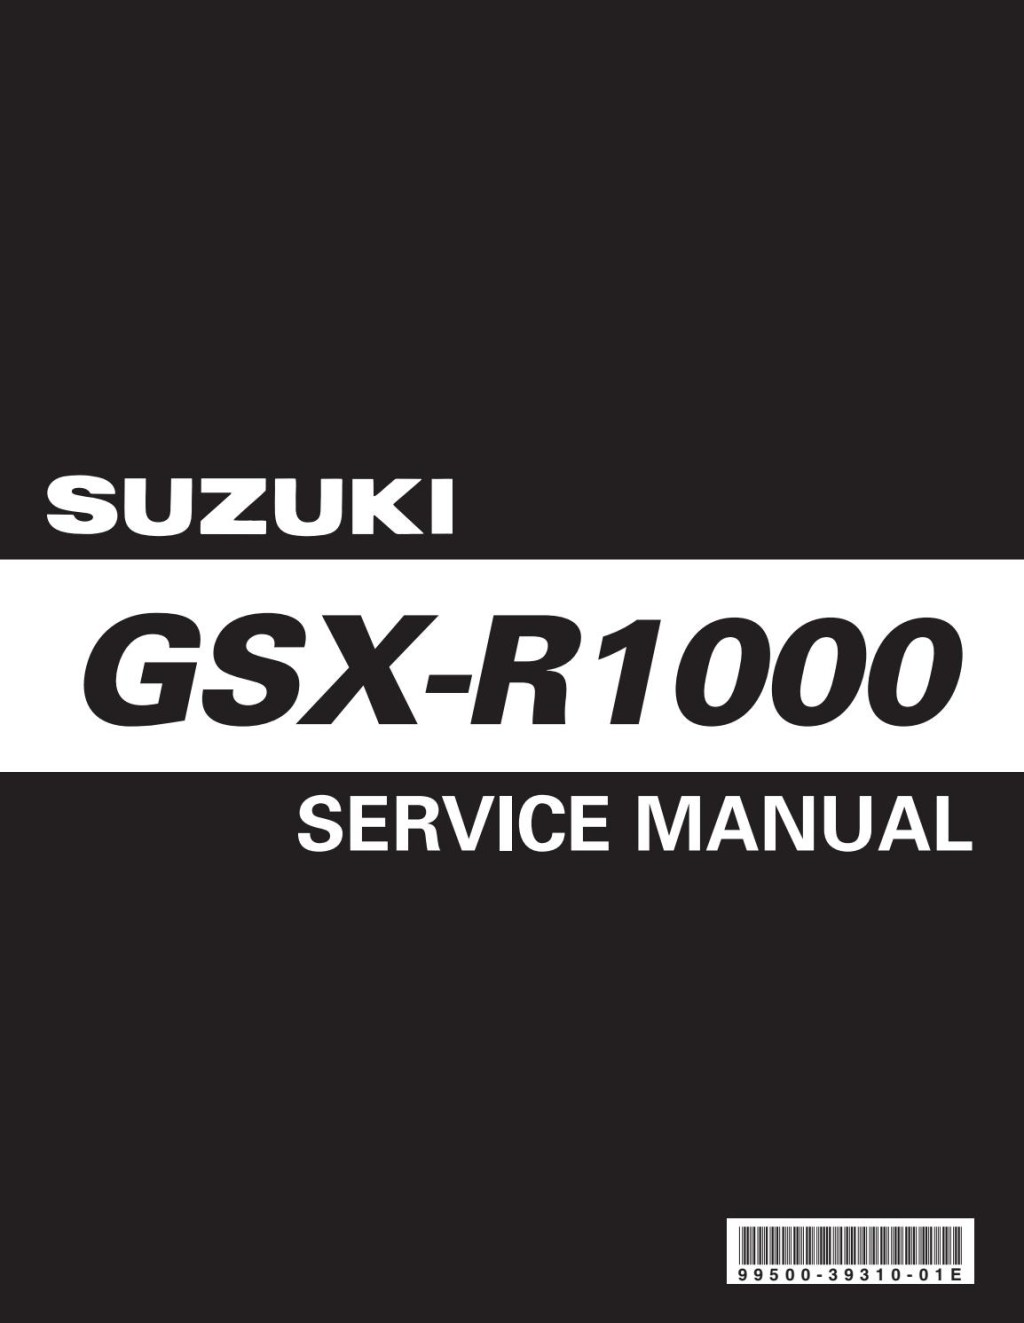 07 08 suzuki gsxr 1000 service manual free pdf download - Suzuki GSX-R GSXR K Service Repair Manual by